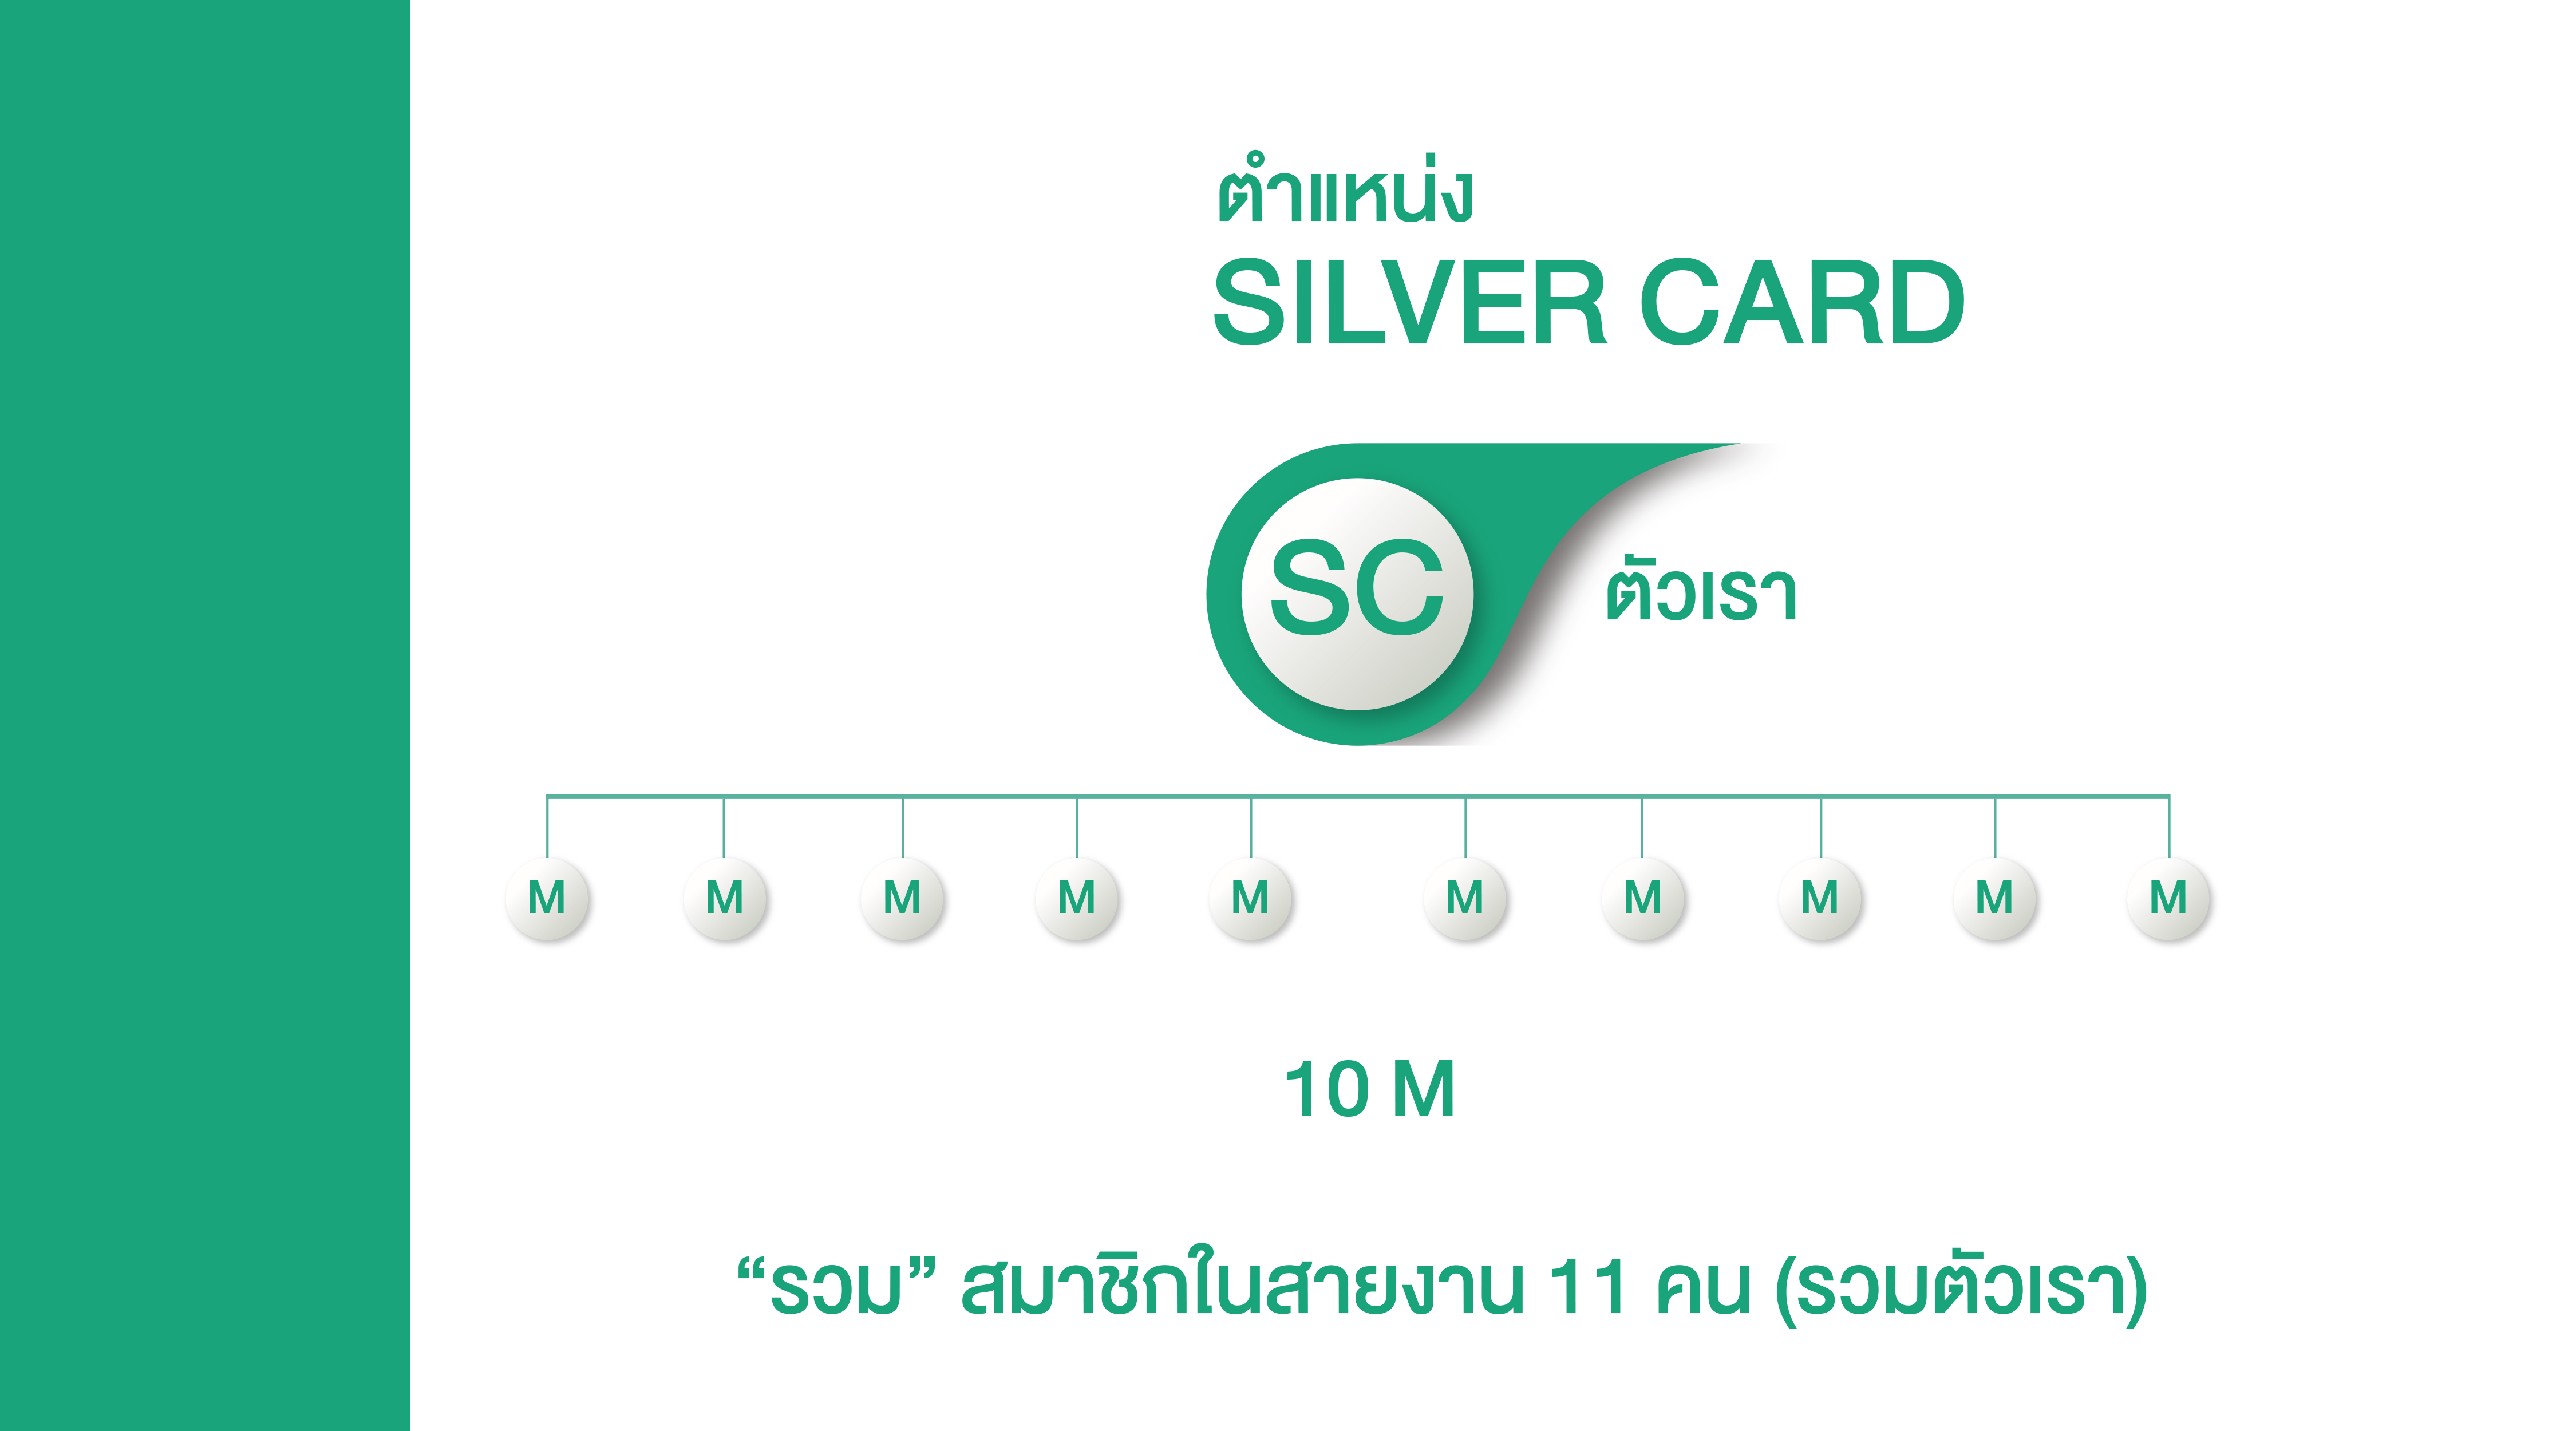 SC (SILVER CARD)